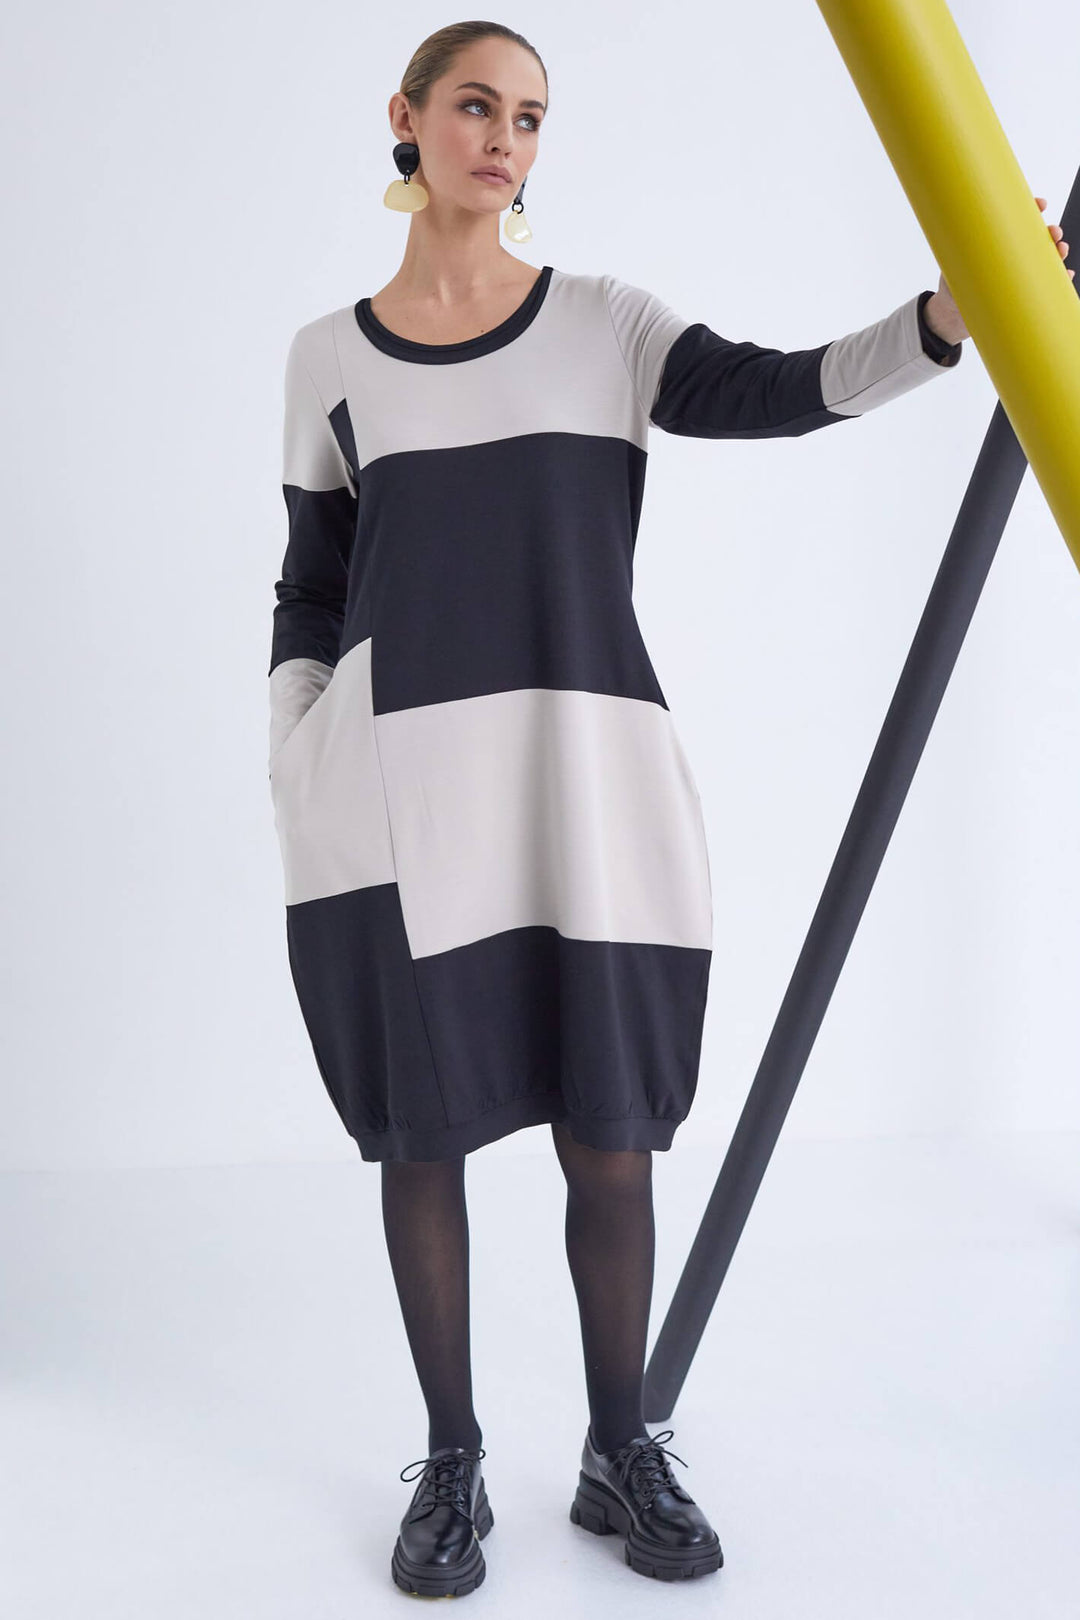 Naya NAW23125 Black Sand Block Stripe Dress - Olivia Grace Fashion